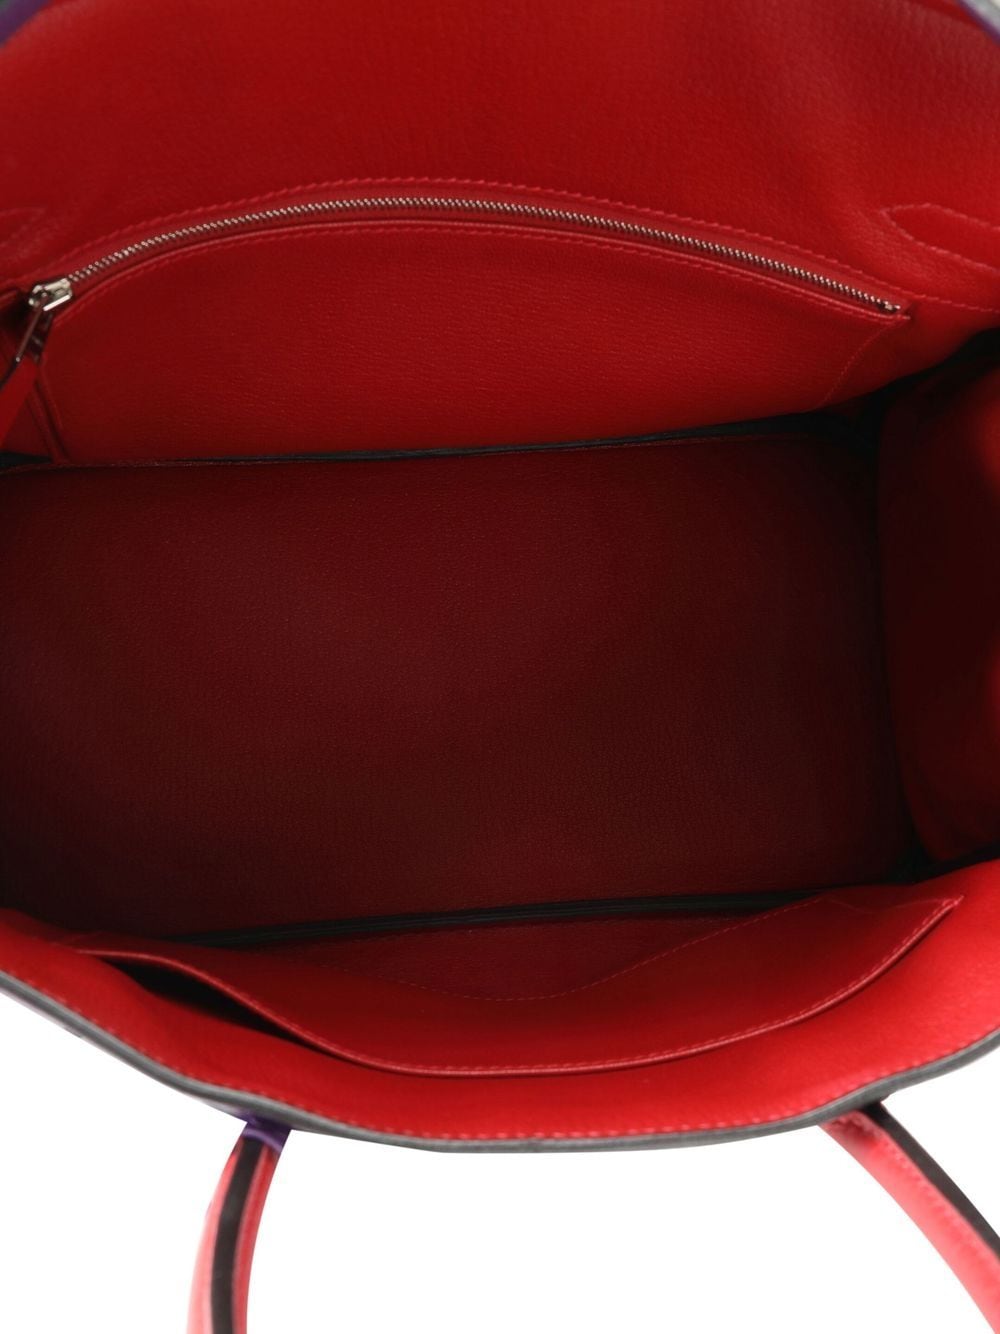 Hermès 2013 Birkin 30 Handbag